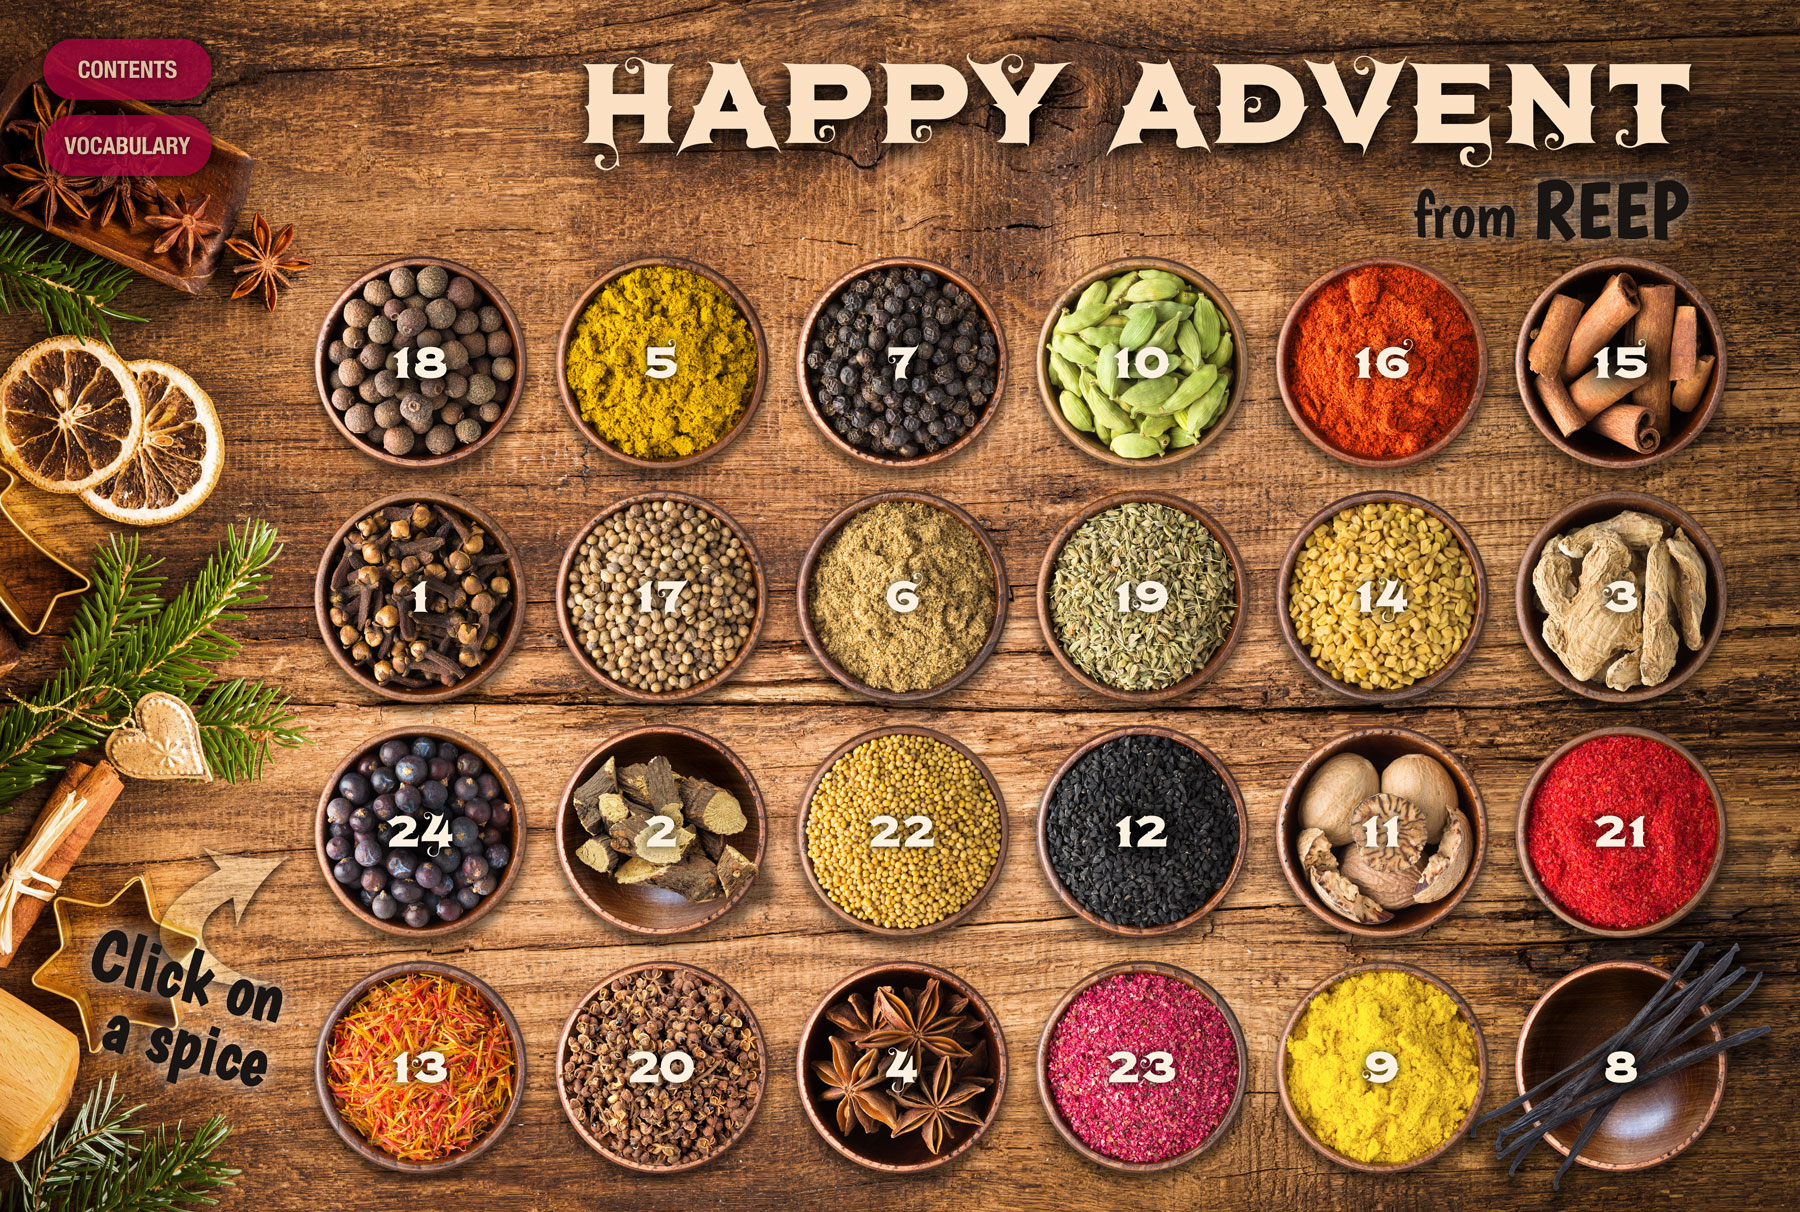 Spice Advent Calendar